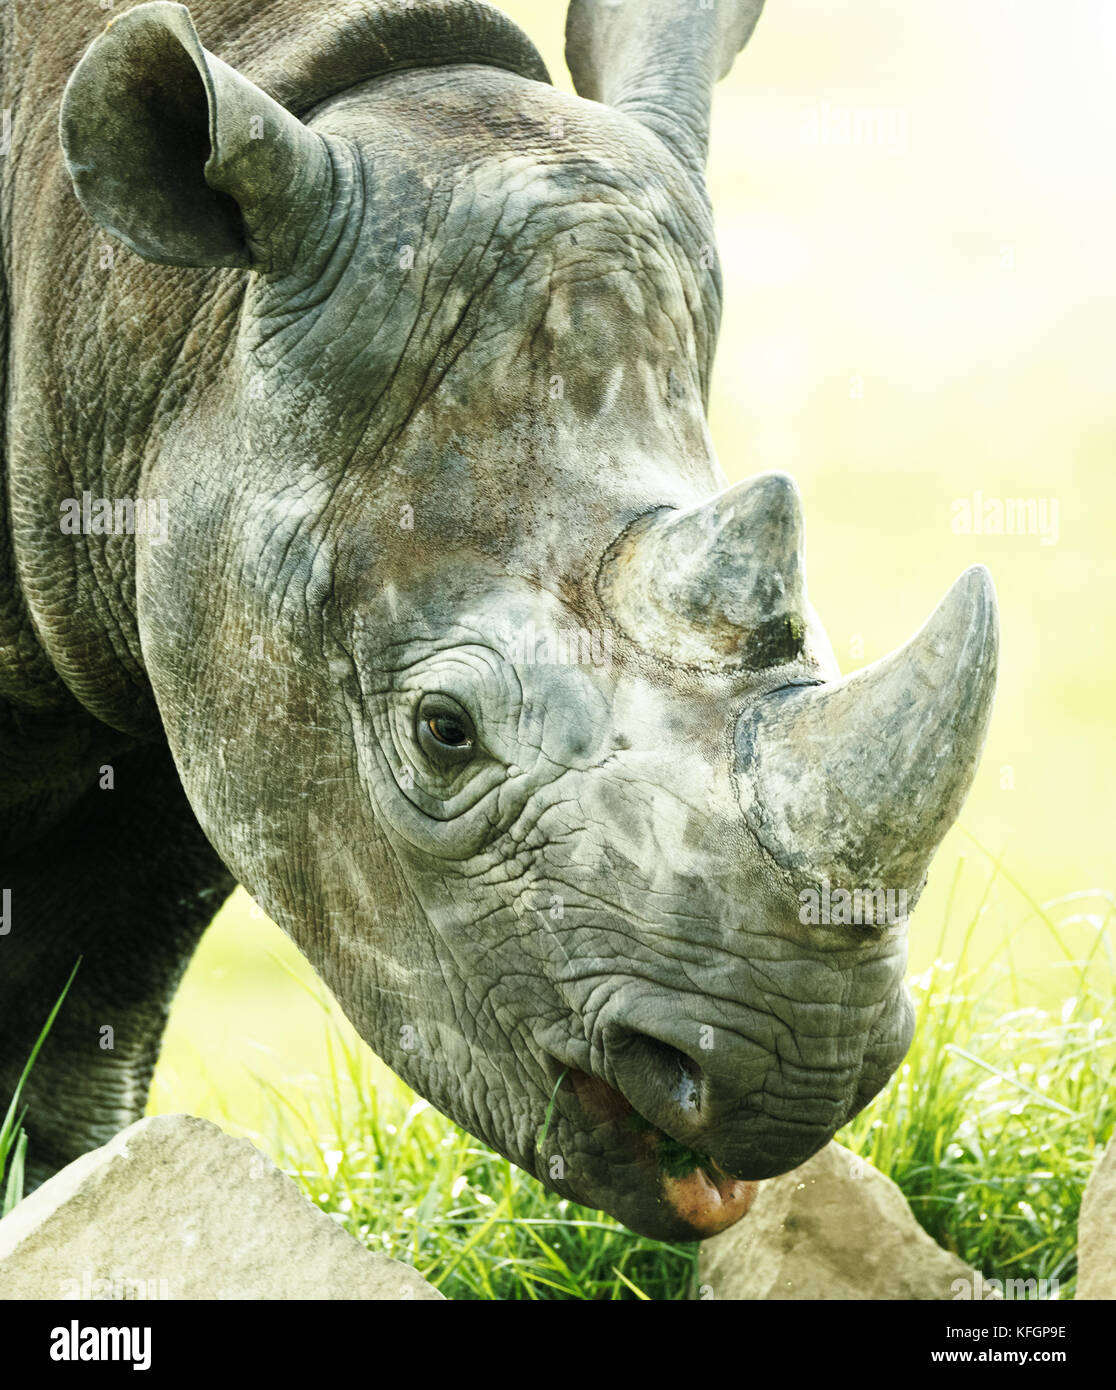 Rhino eating close up shot Stock Photo